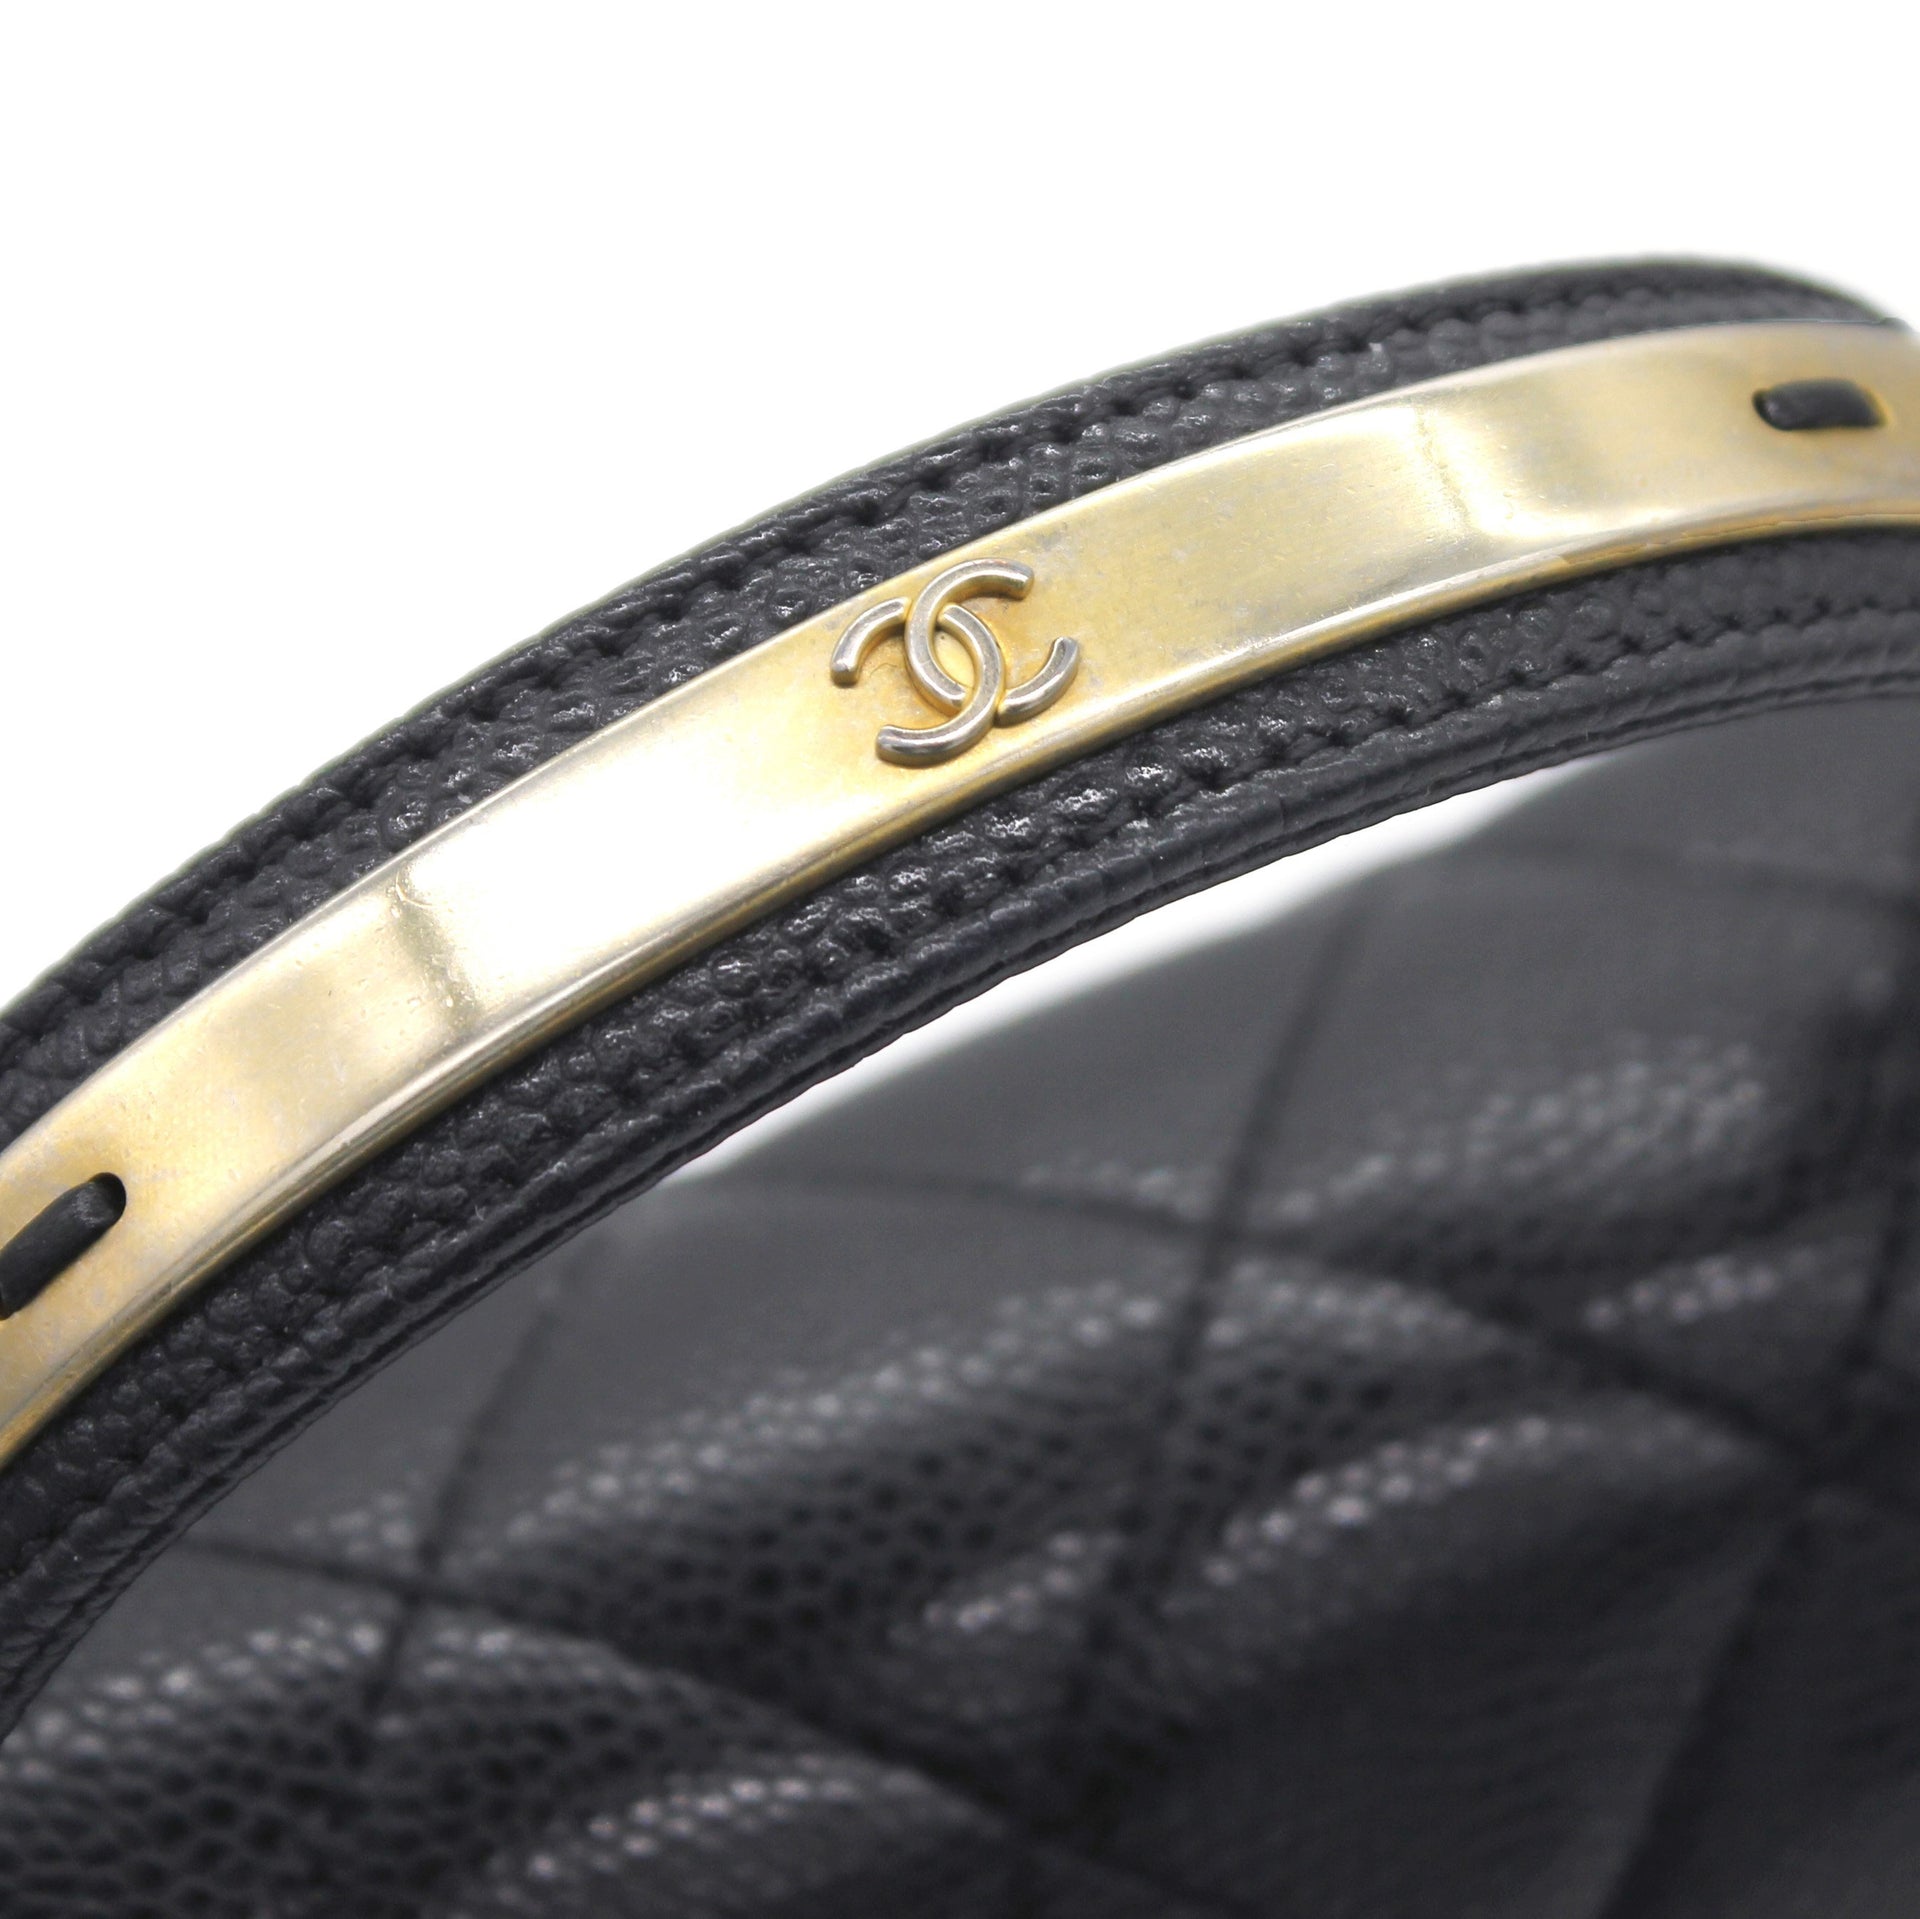 Caviar Black Flap Top Handle Bag